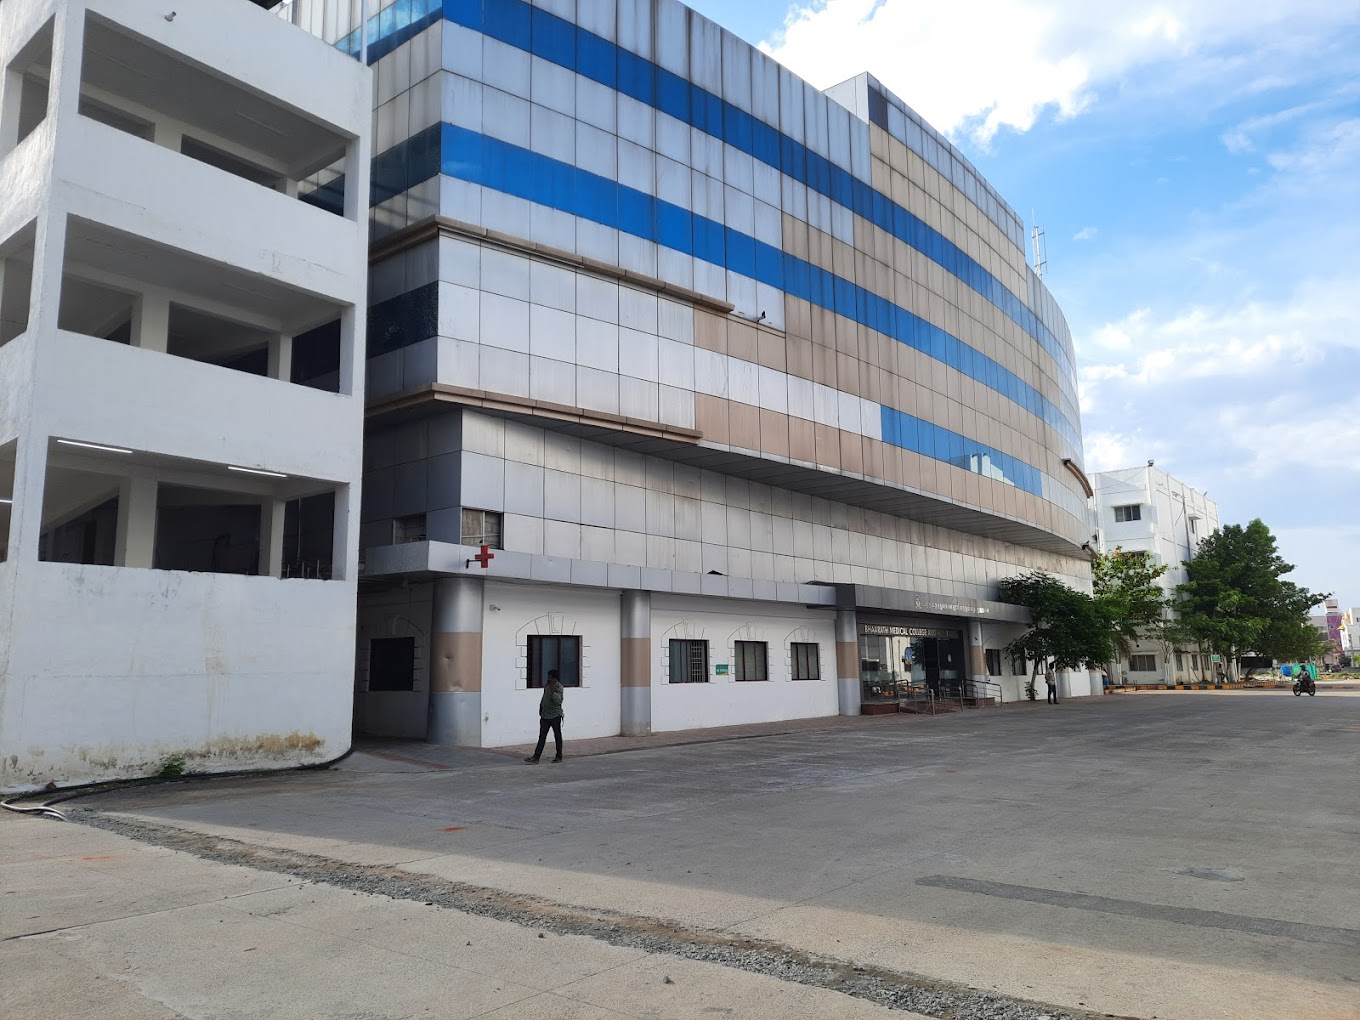 Bhaarath Medical College and Hospital, Chennai, Tamil Nadu